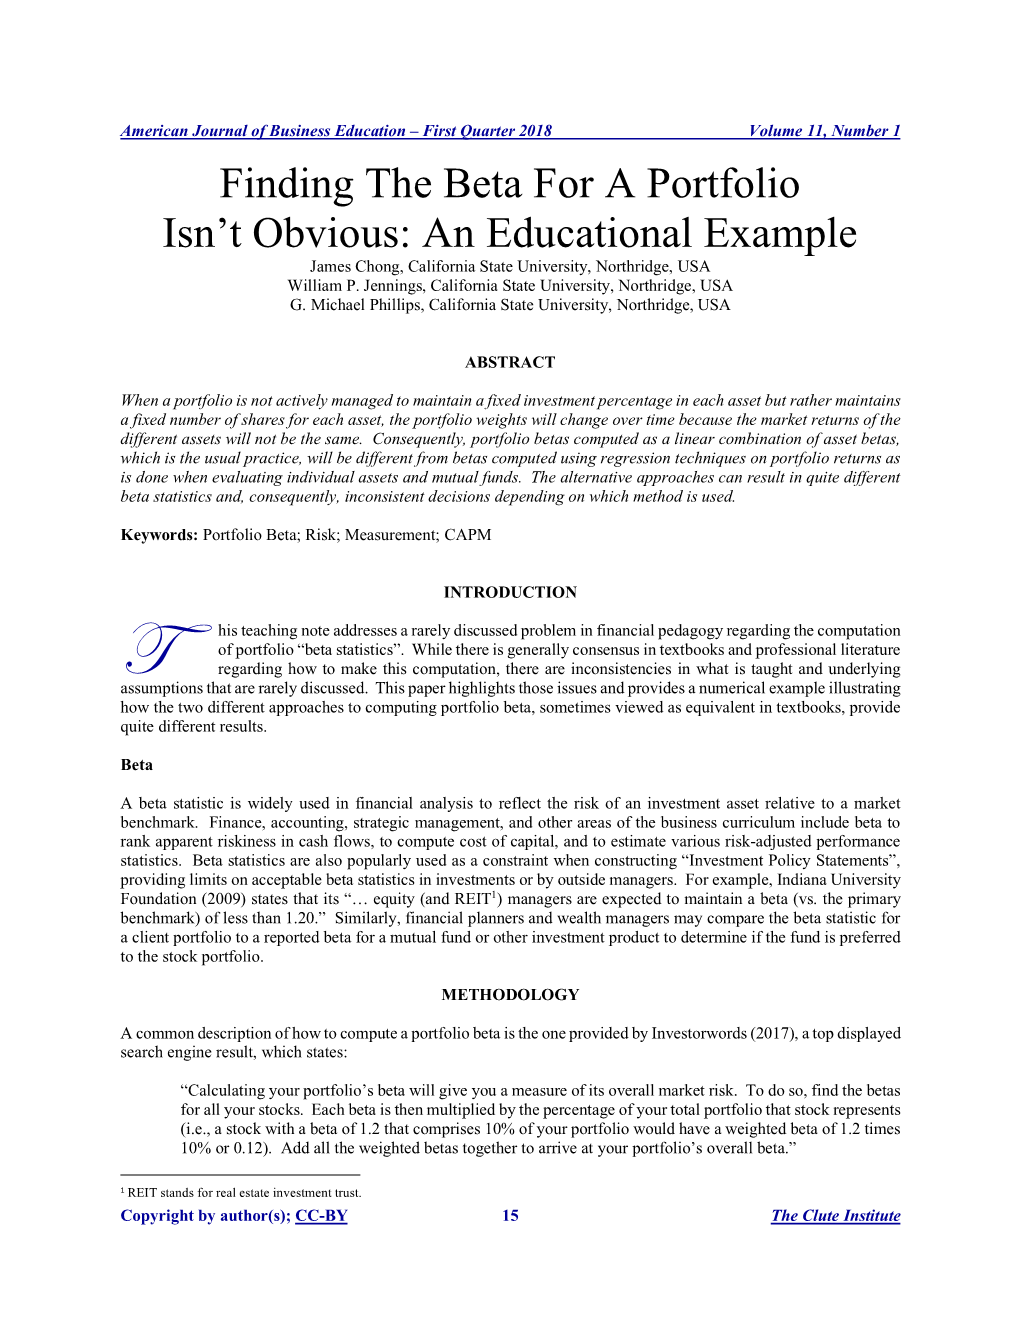 Finding the Beta for a Portfolio Isn't Obvious